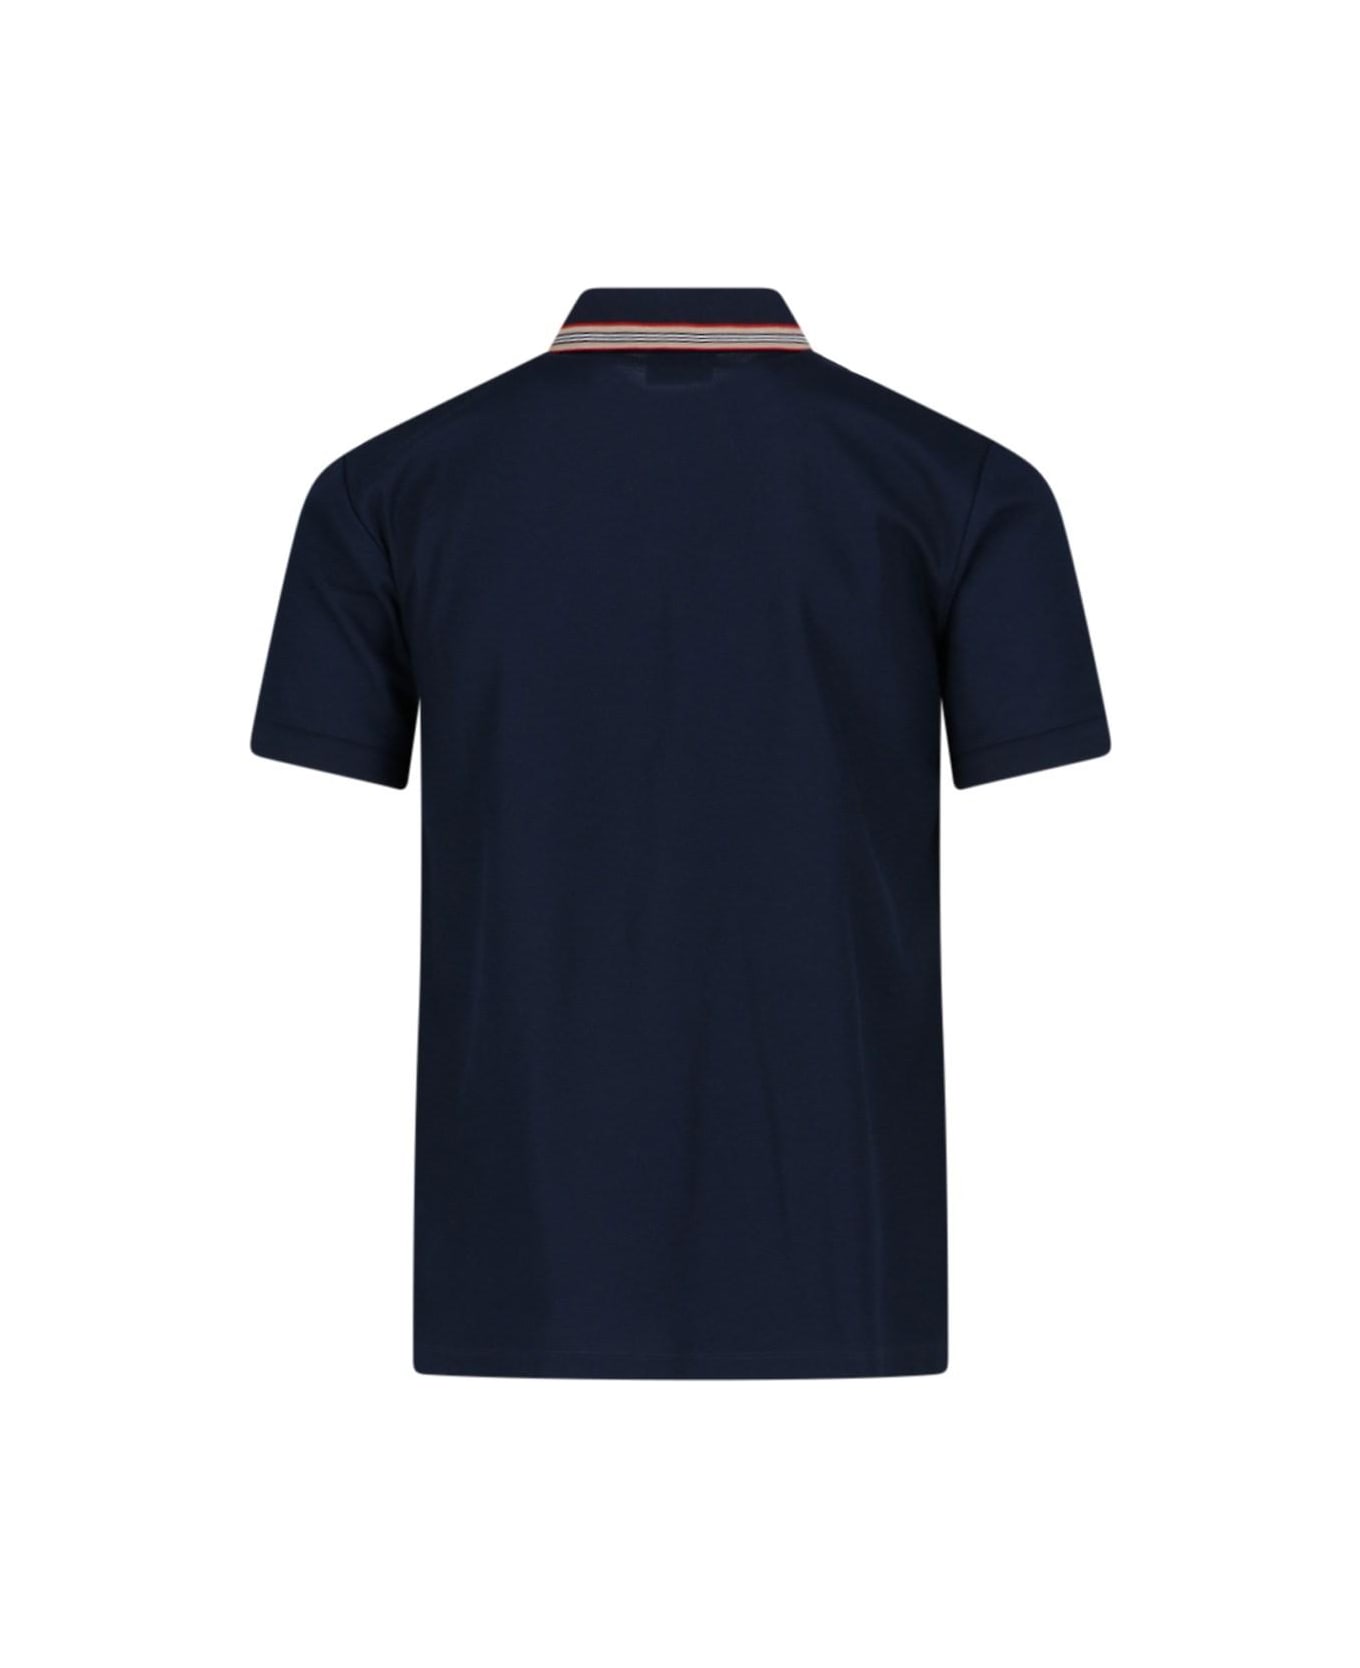 Burberry Striped Detail Polo Shirt - Coal blue ポロシャツ